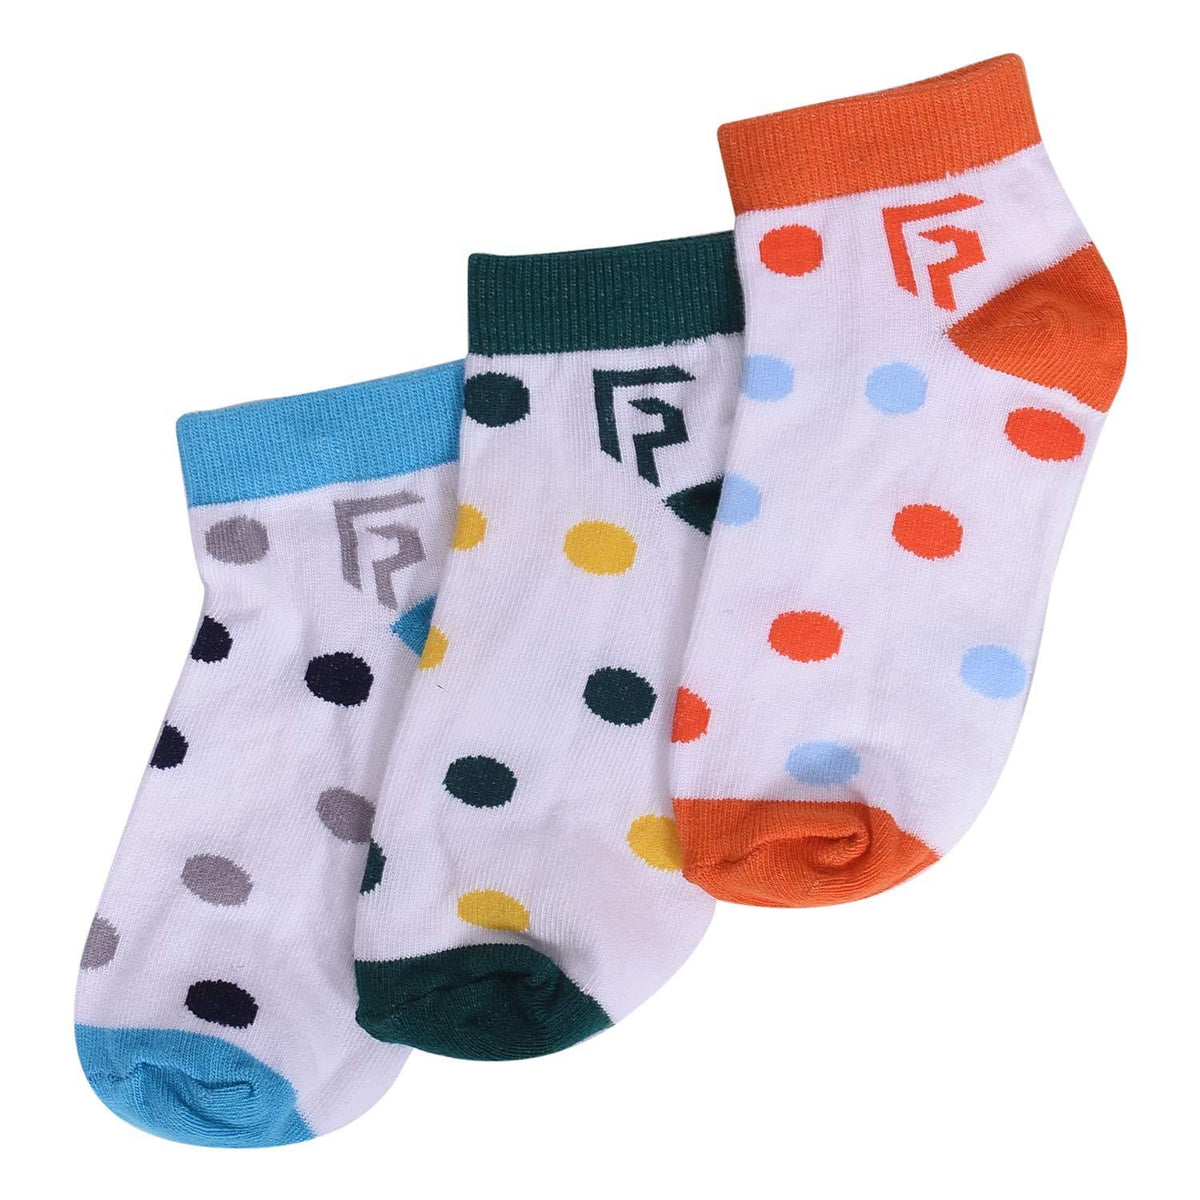 FOOTPRINTS Organic cotton Kids Socks -5-8 years - Pack of 3 Pairs - Polka Dots